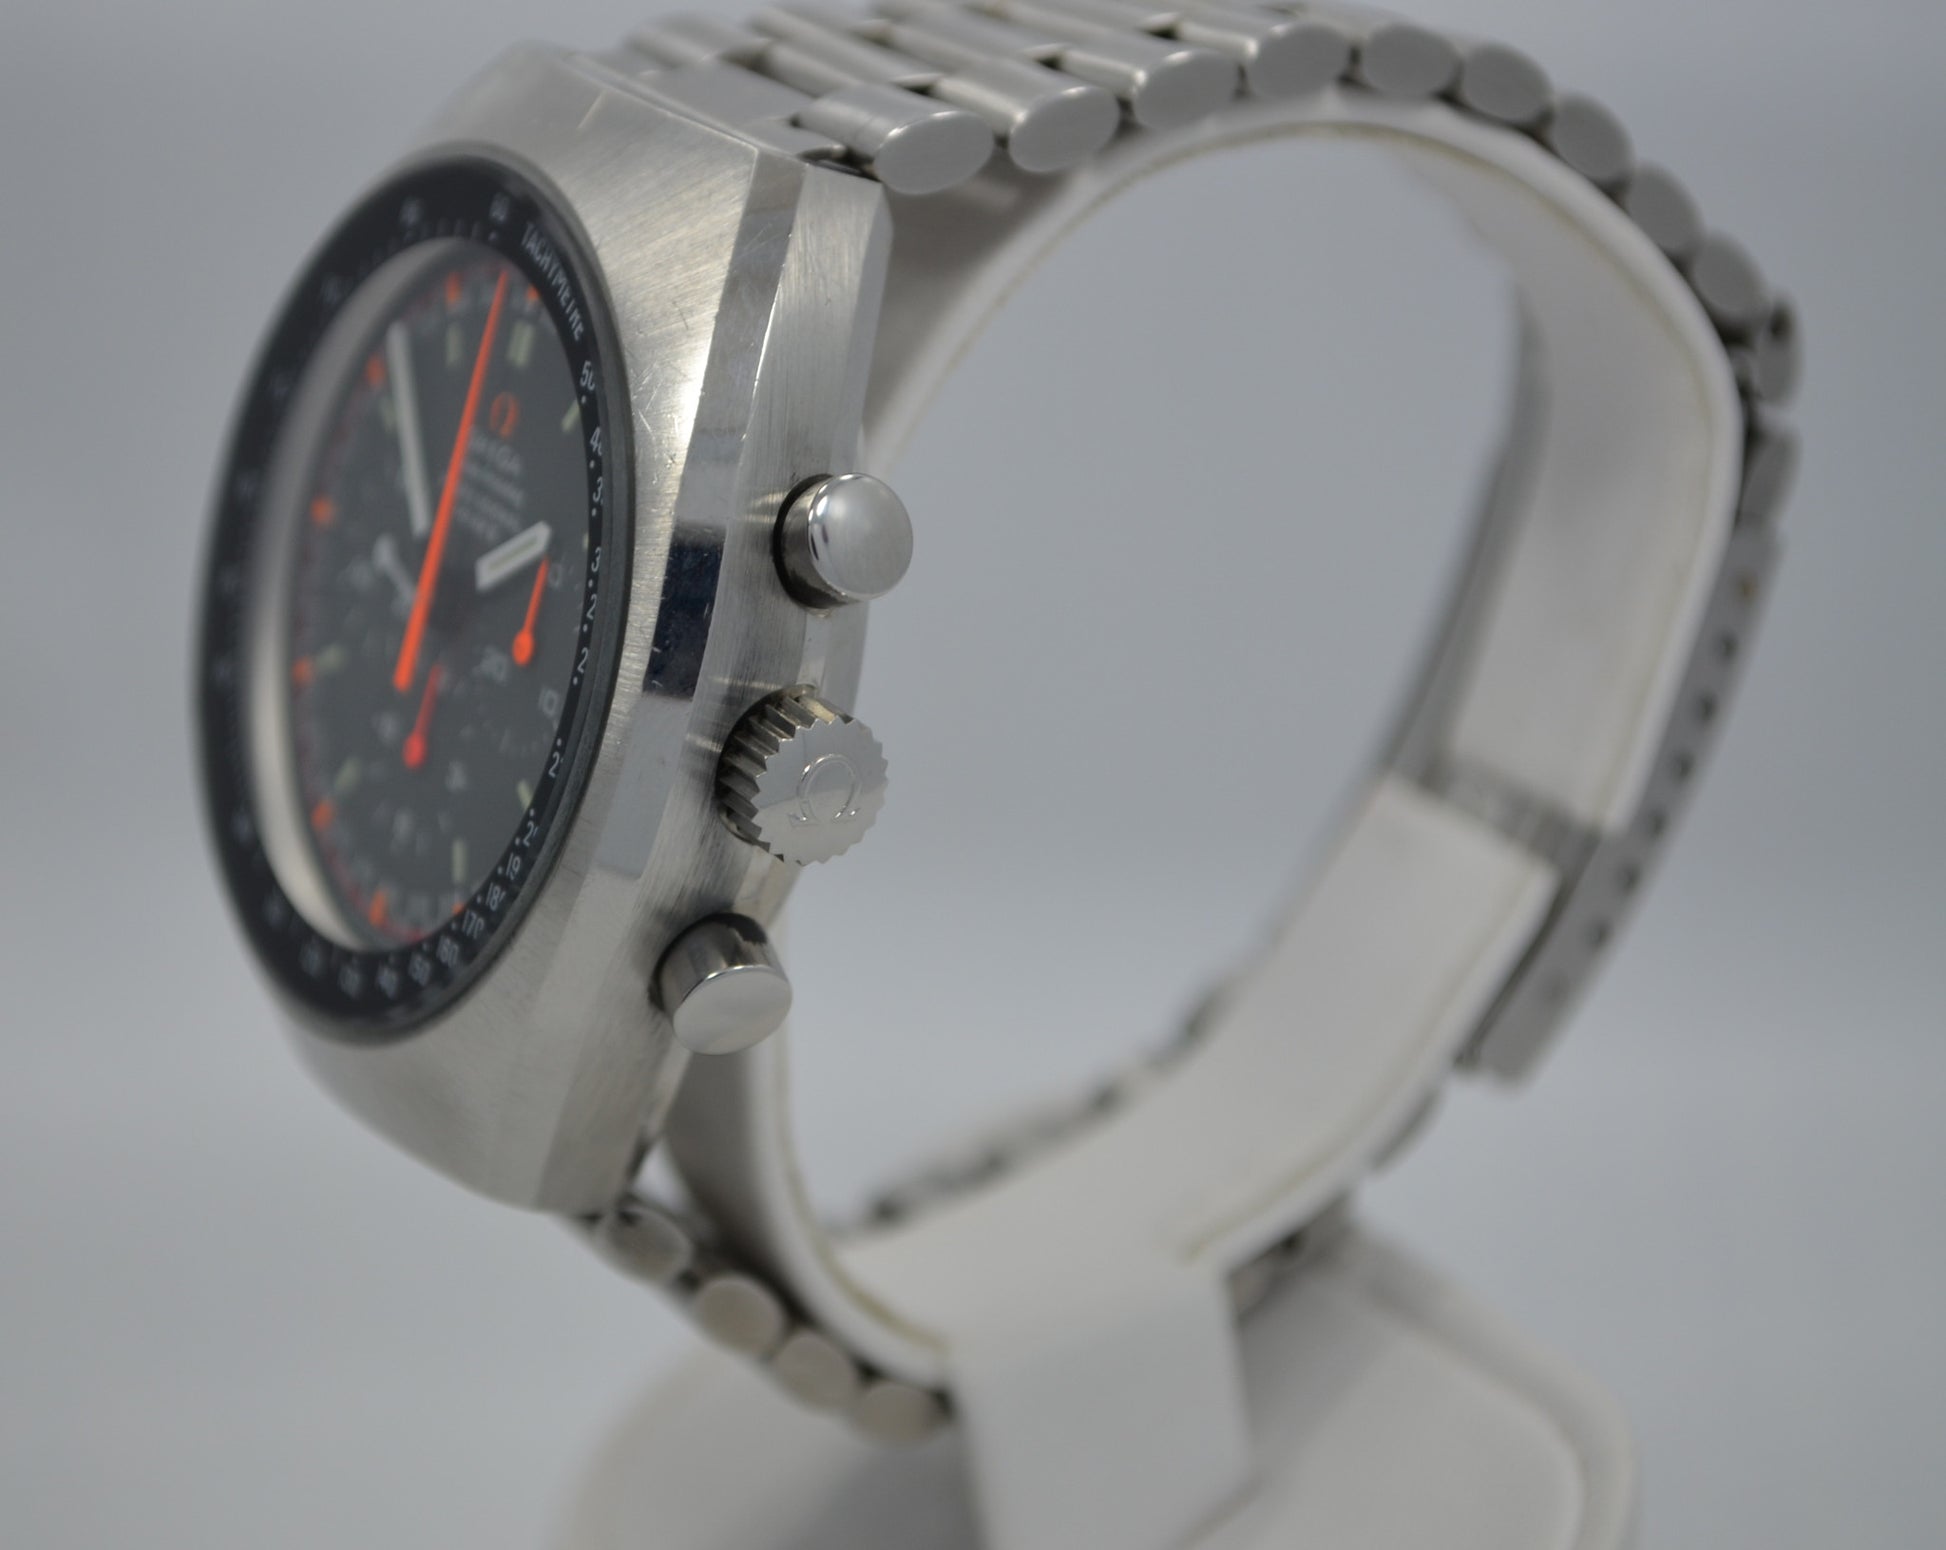 Vintage Omega Speedmaster Mark II 145.014 Chronograph Stainless Steel 861 Wristwatch - Hashtag Watch Company